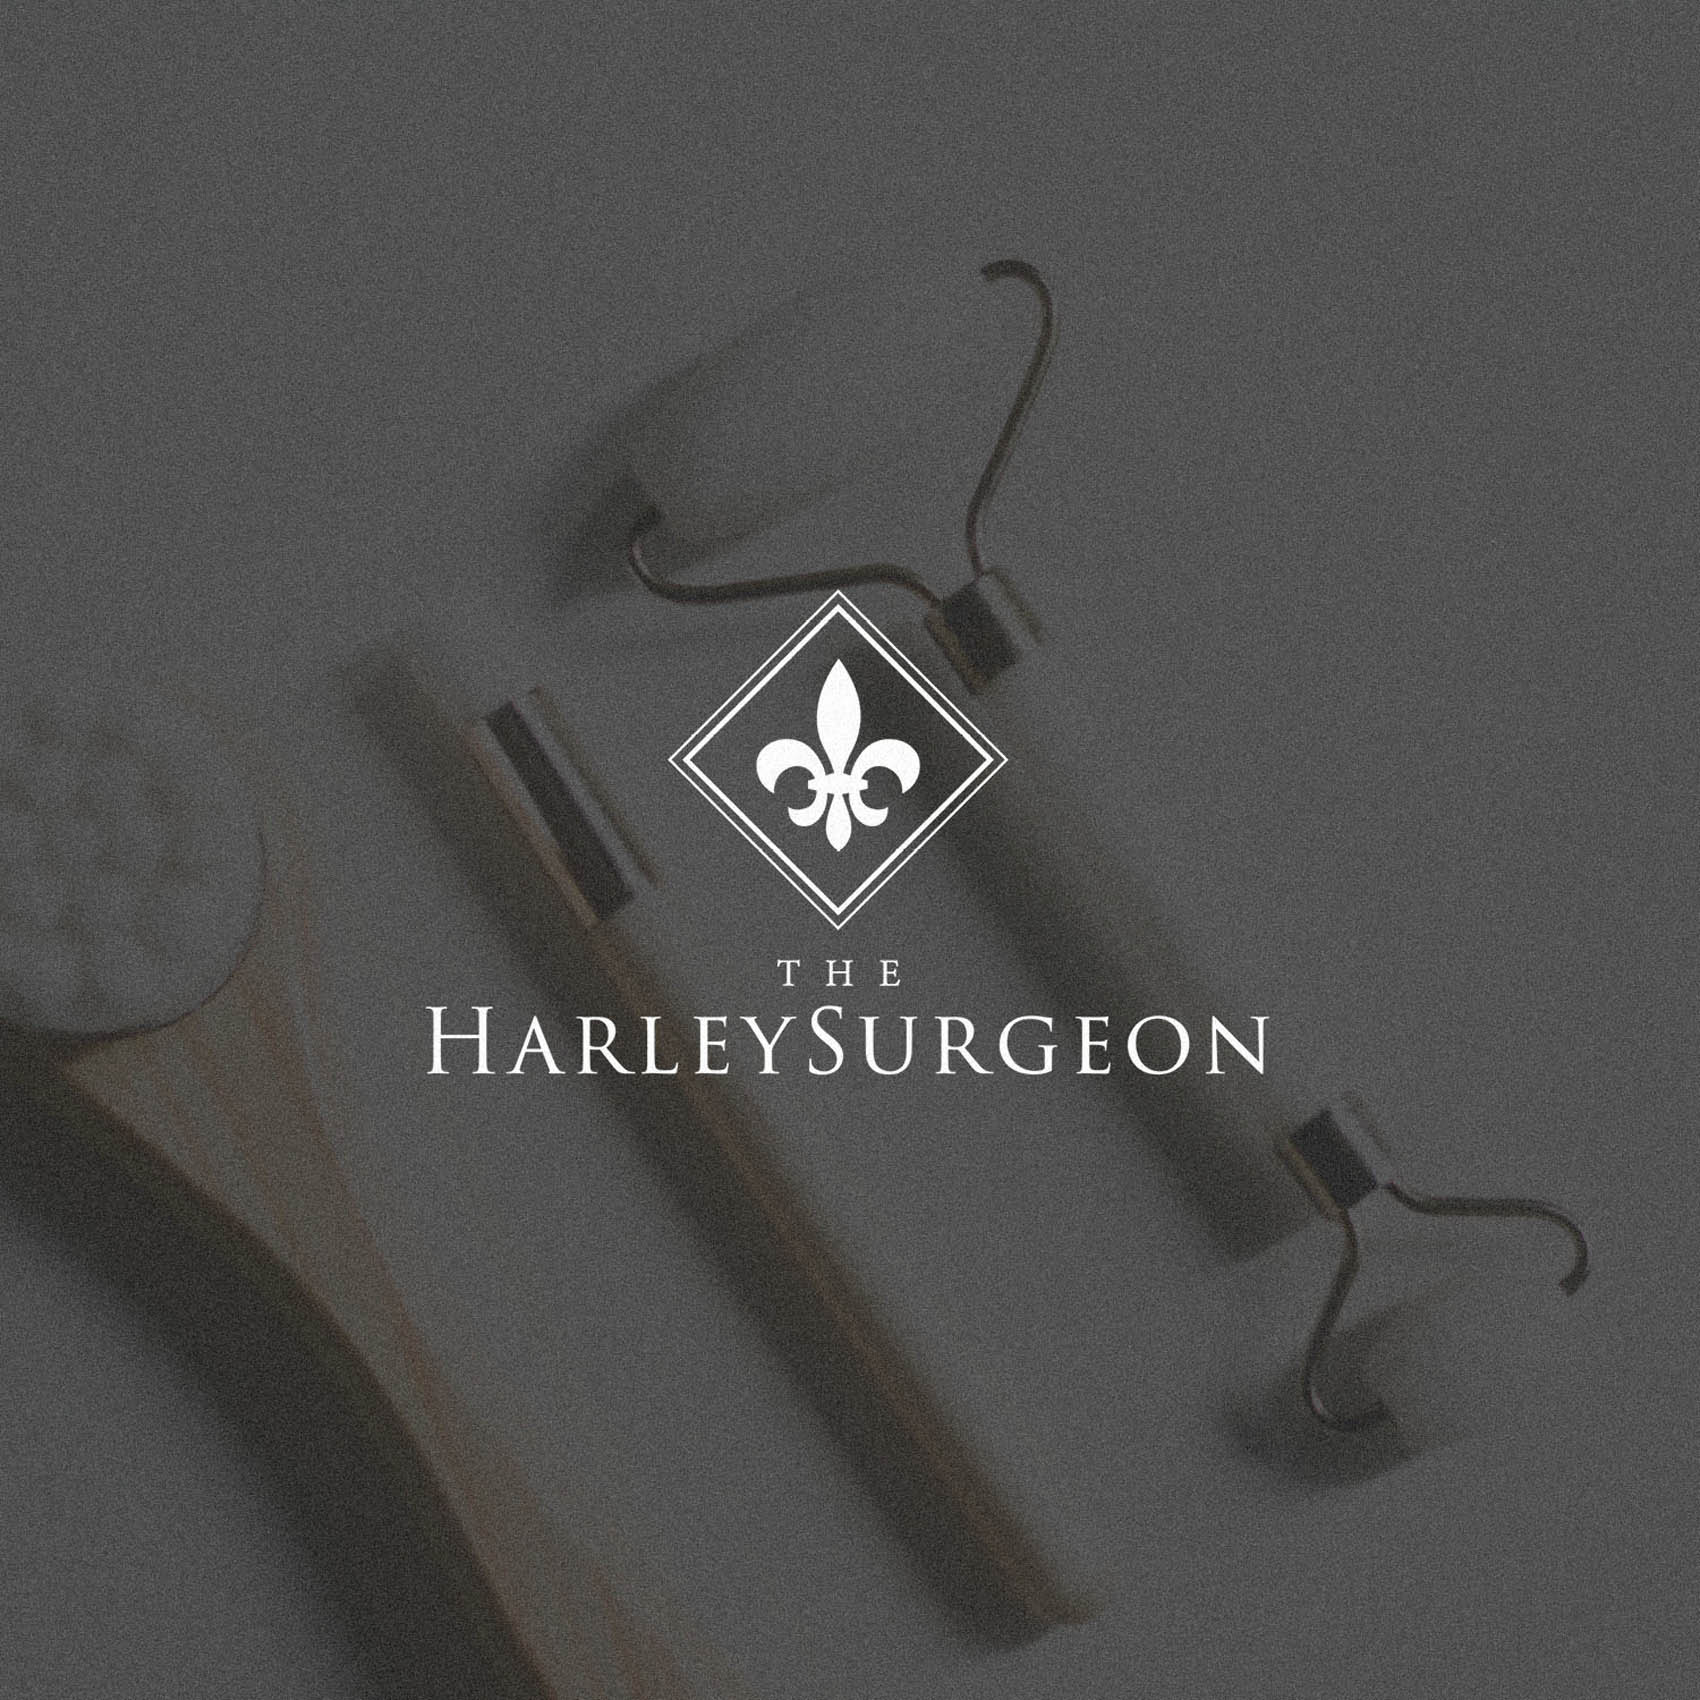 The Harley Surgeon - Luxury High End brand identity logo design london3